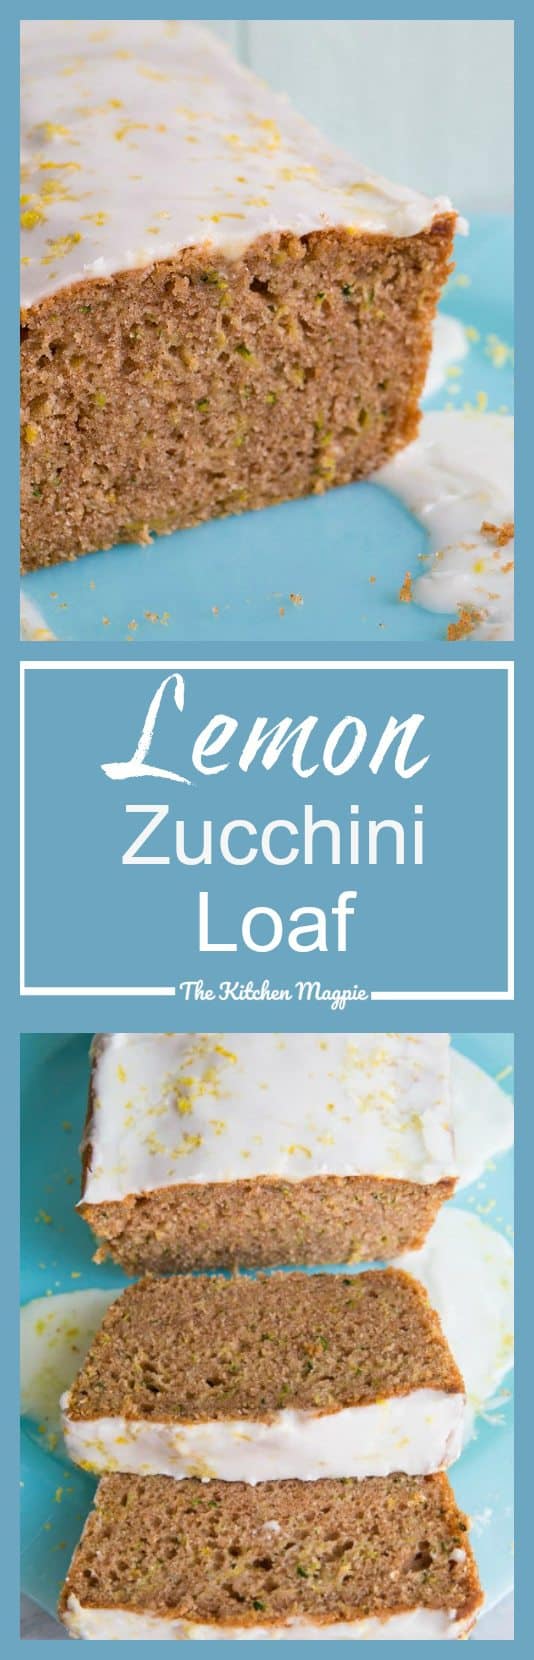 Lemon Zucchini Loaf - The Kitchen Magpie